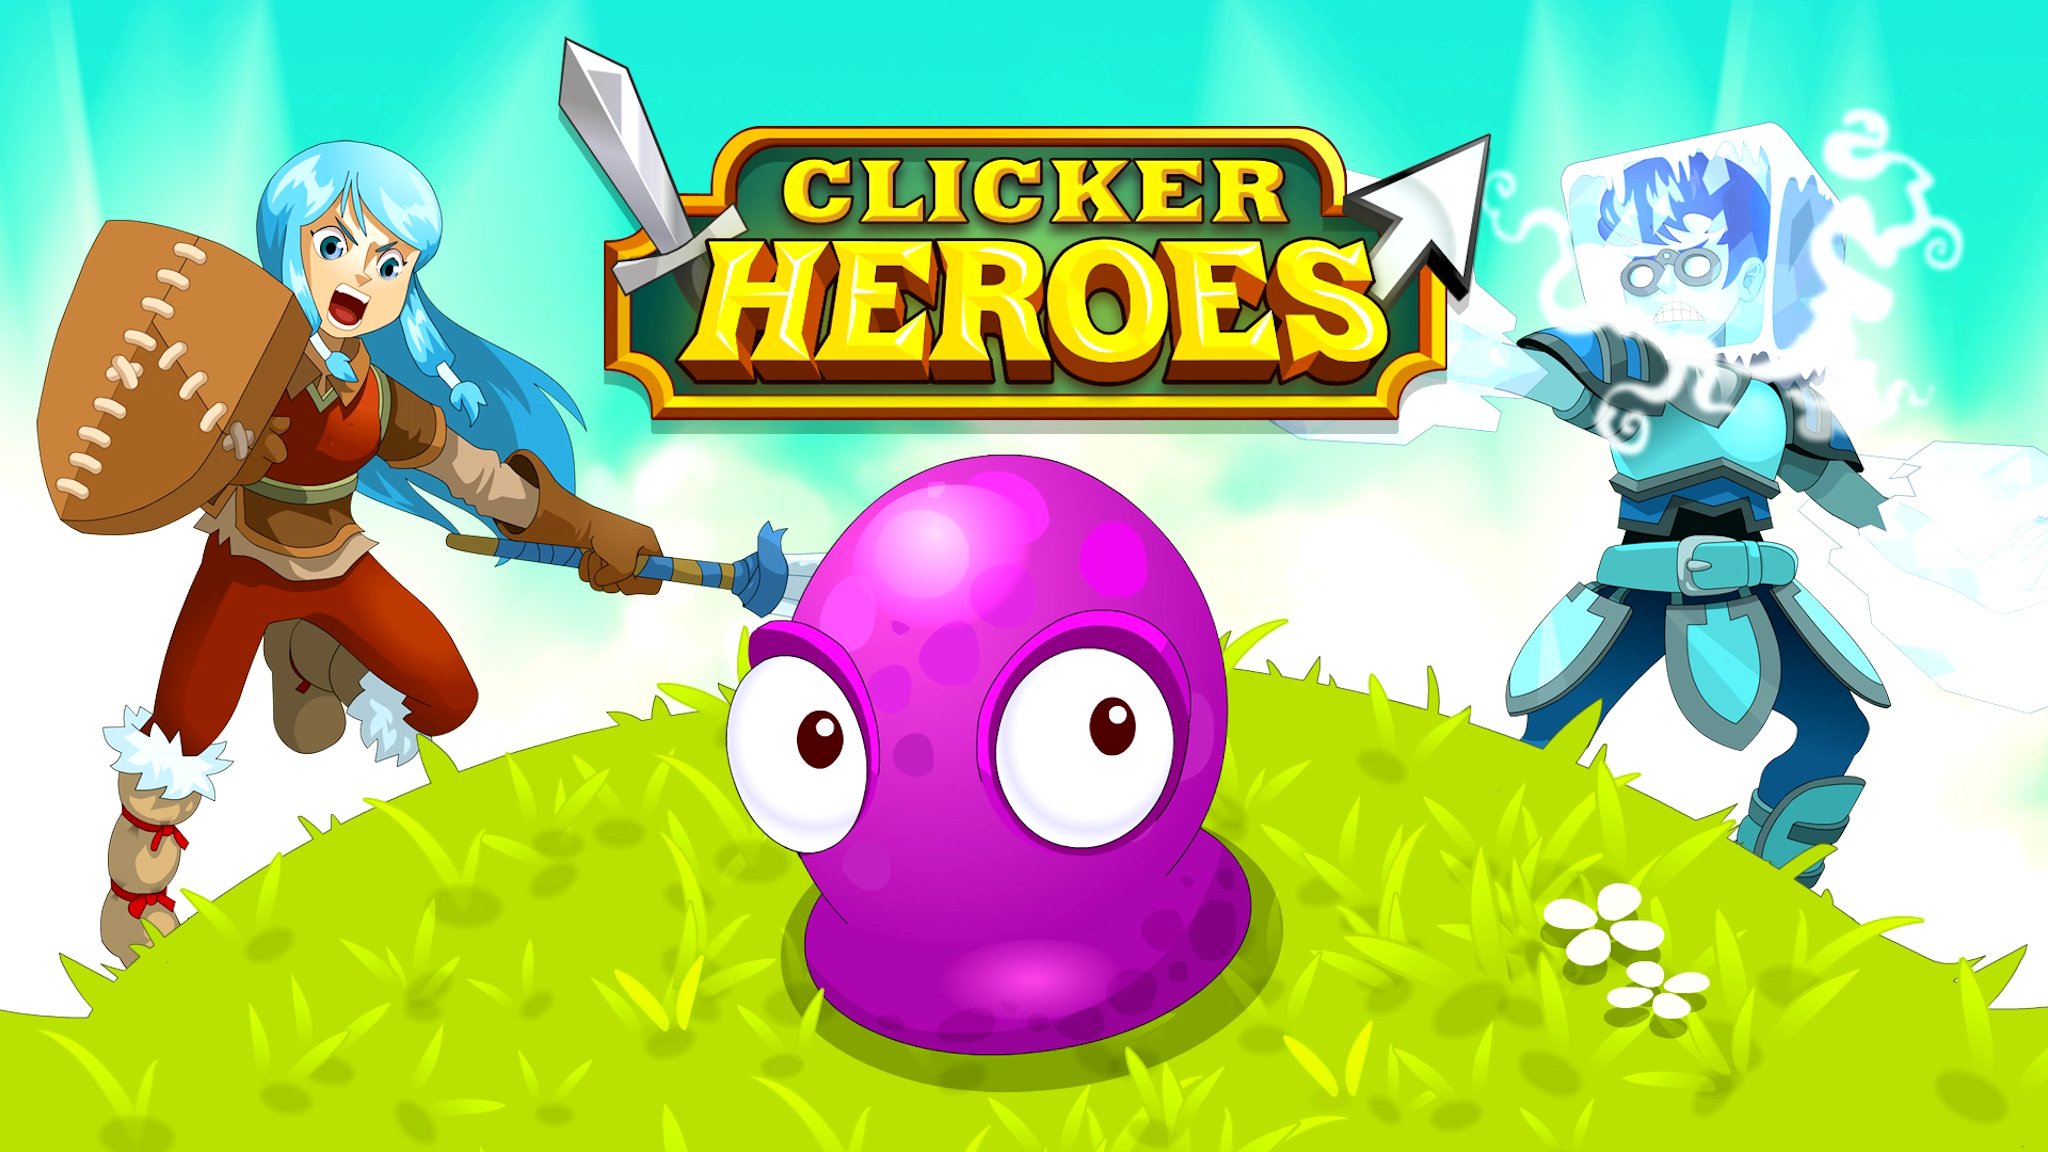 Clicker Heroes - Walkthrough, Tips, Review